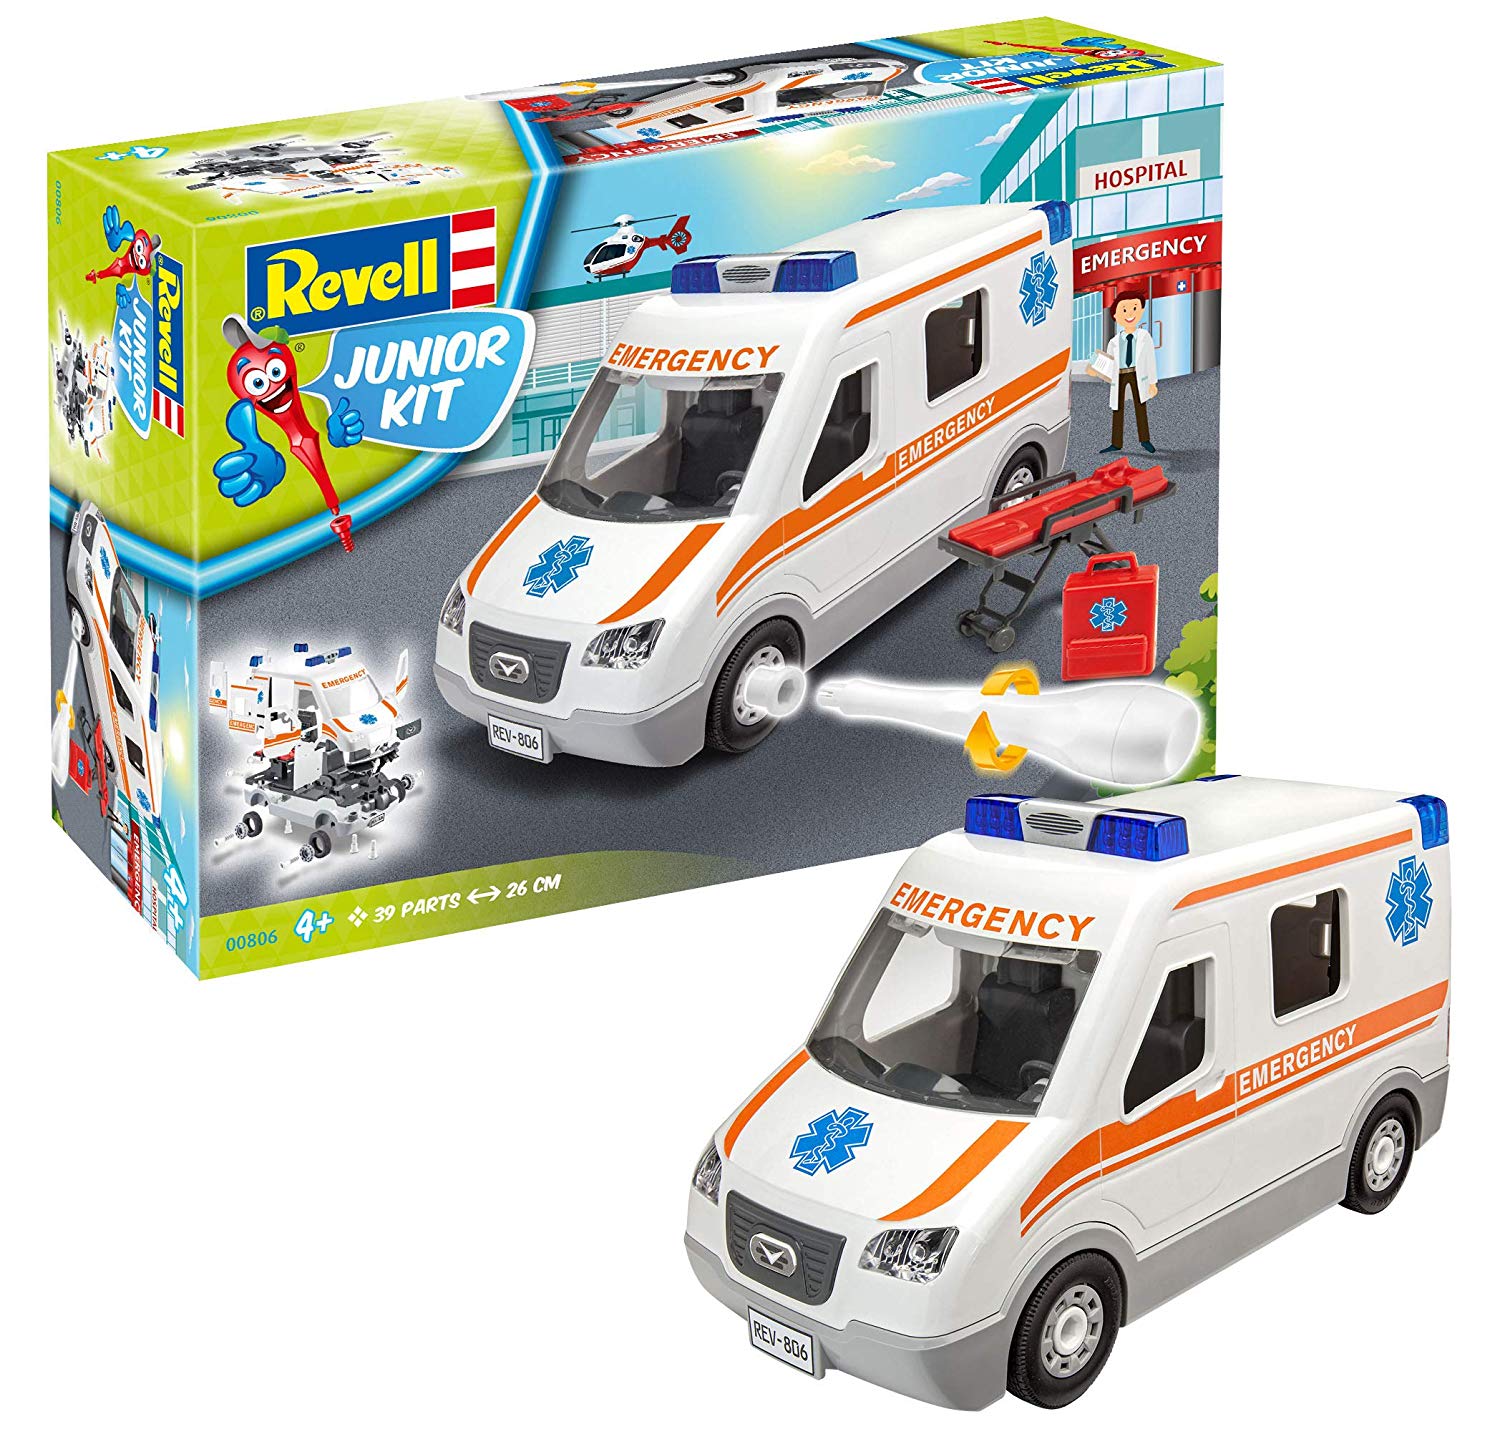 Revell Junior Kit Ambulance Car Model Kits For Children For Crafts And Game